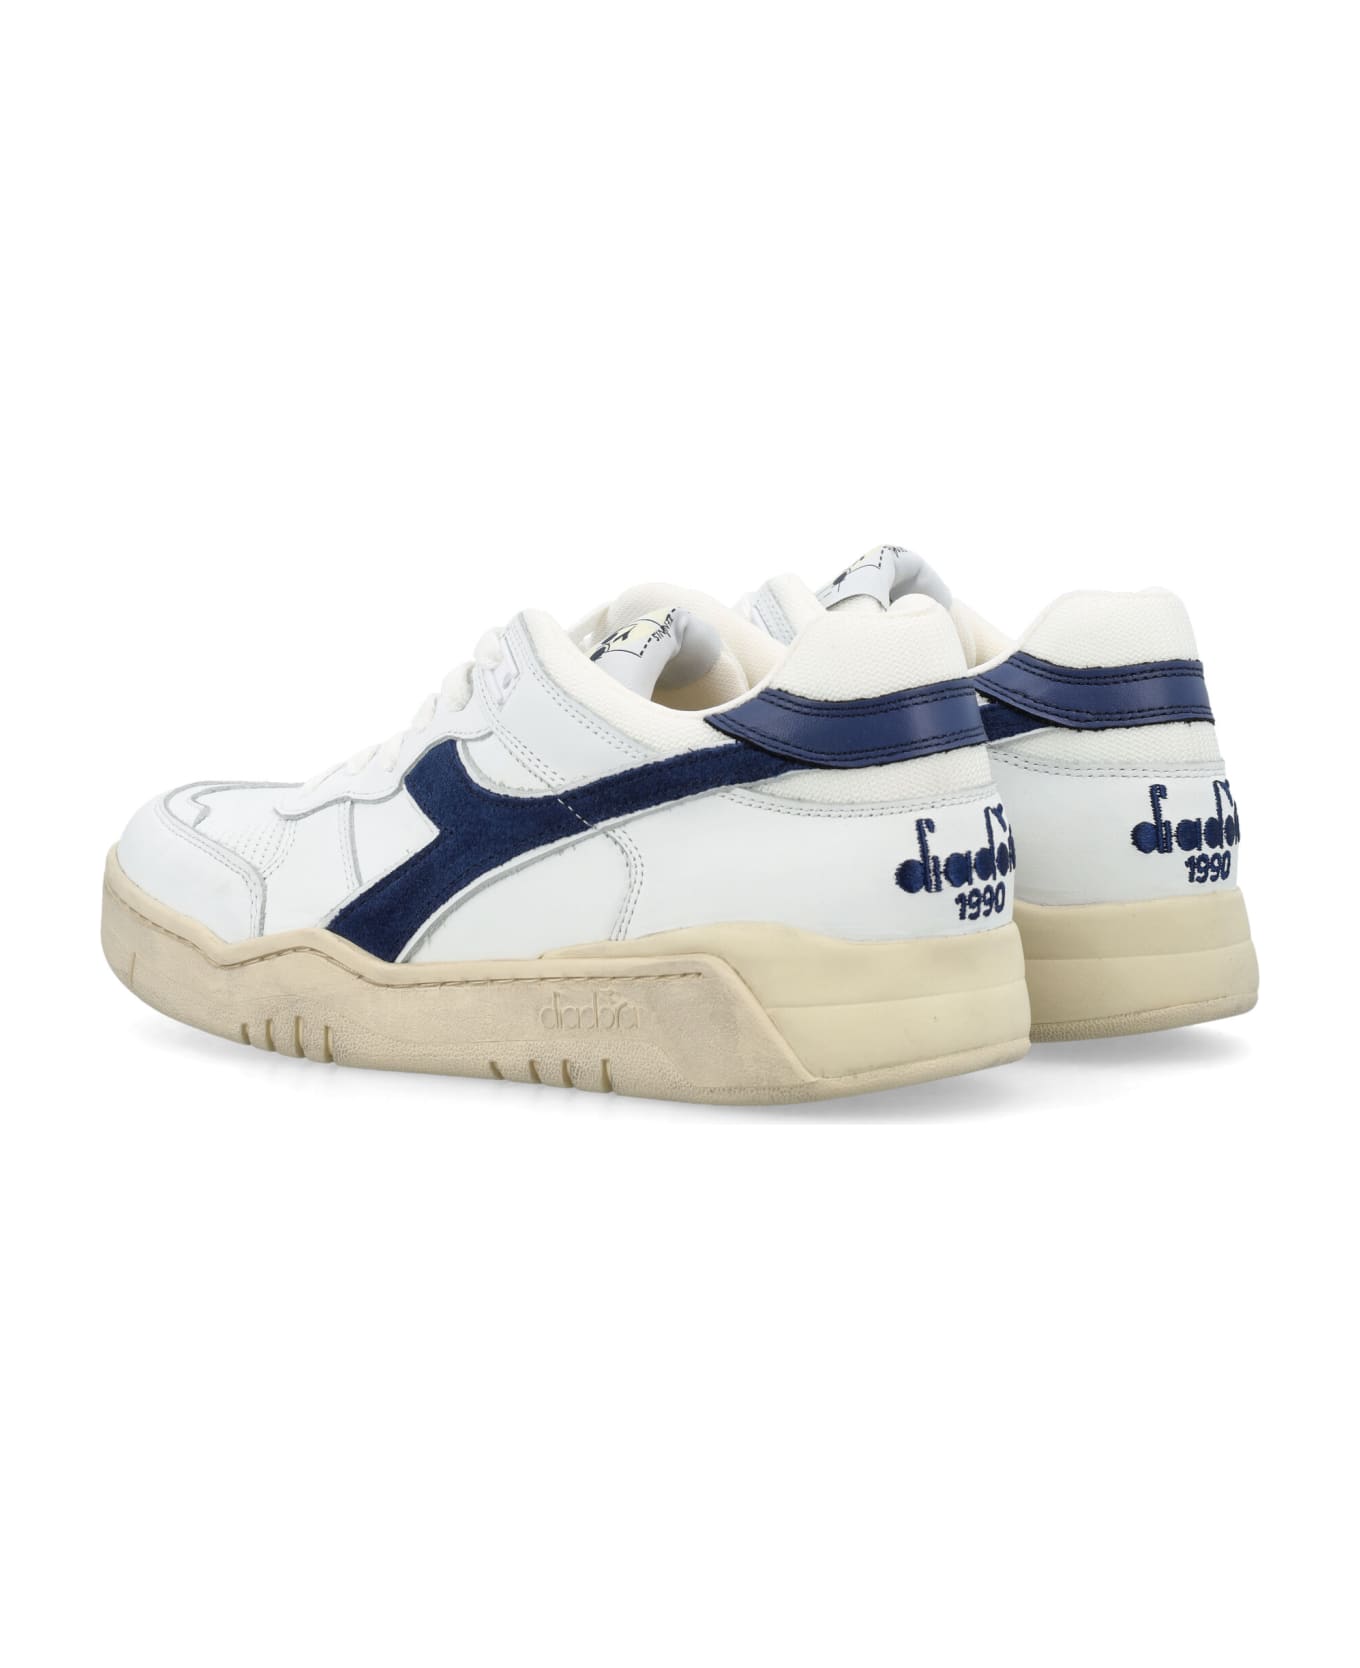 Diadora Heritage B.560 Used Sneakers - WHITE/BLUE